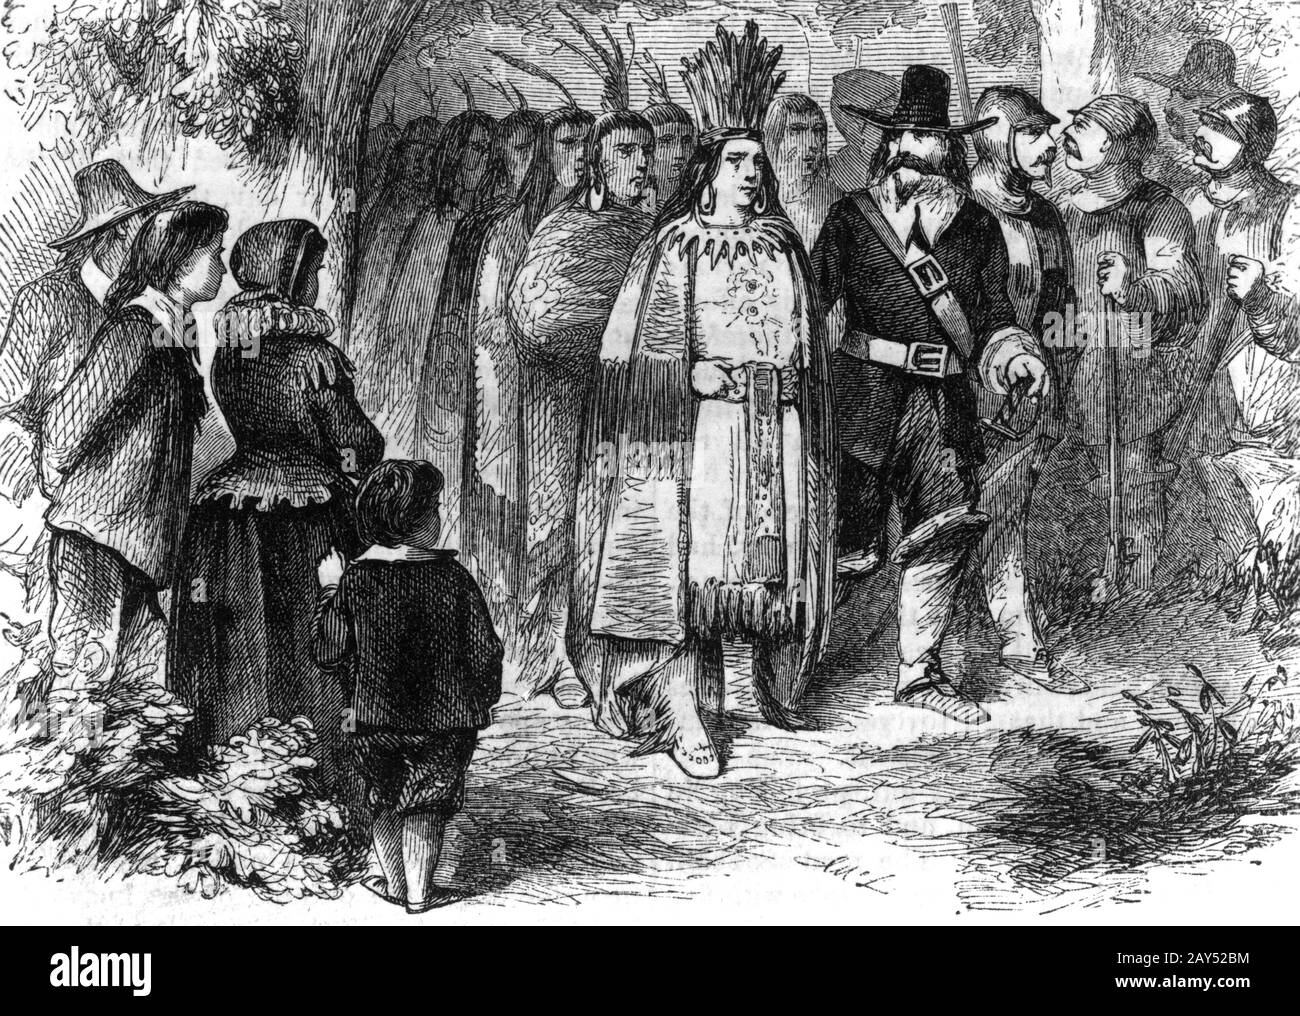 Massasoit, Wampanoag Chief, and his warrior visit the Pilgrims at Plymouth Colony, Circa 1621 Stock Photo